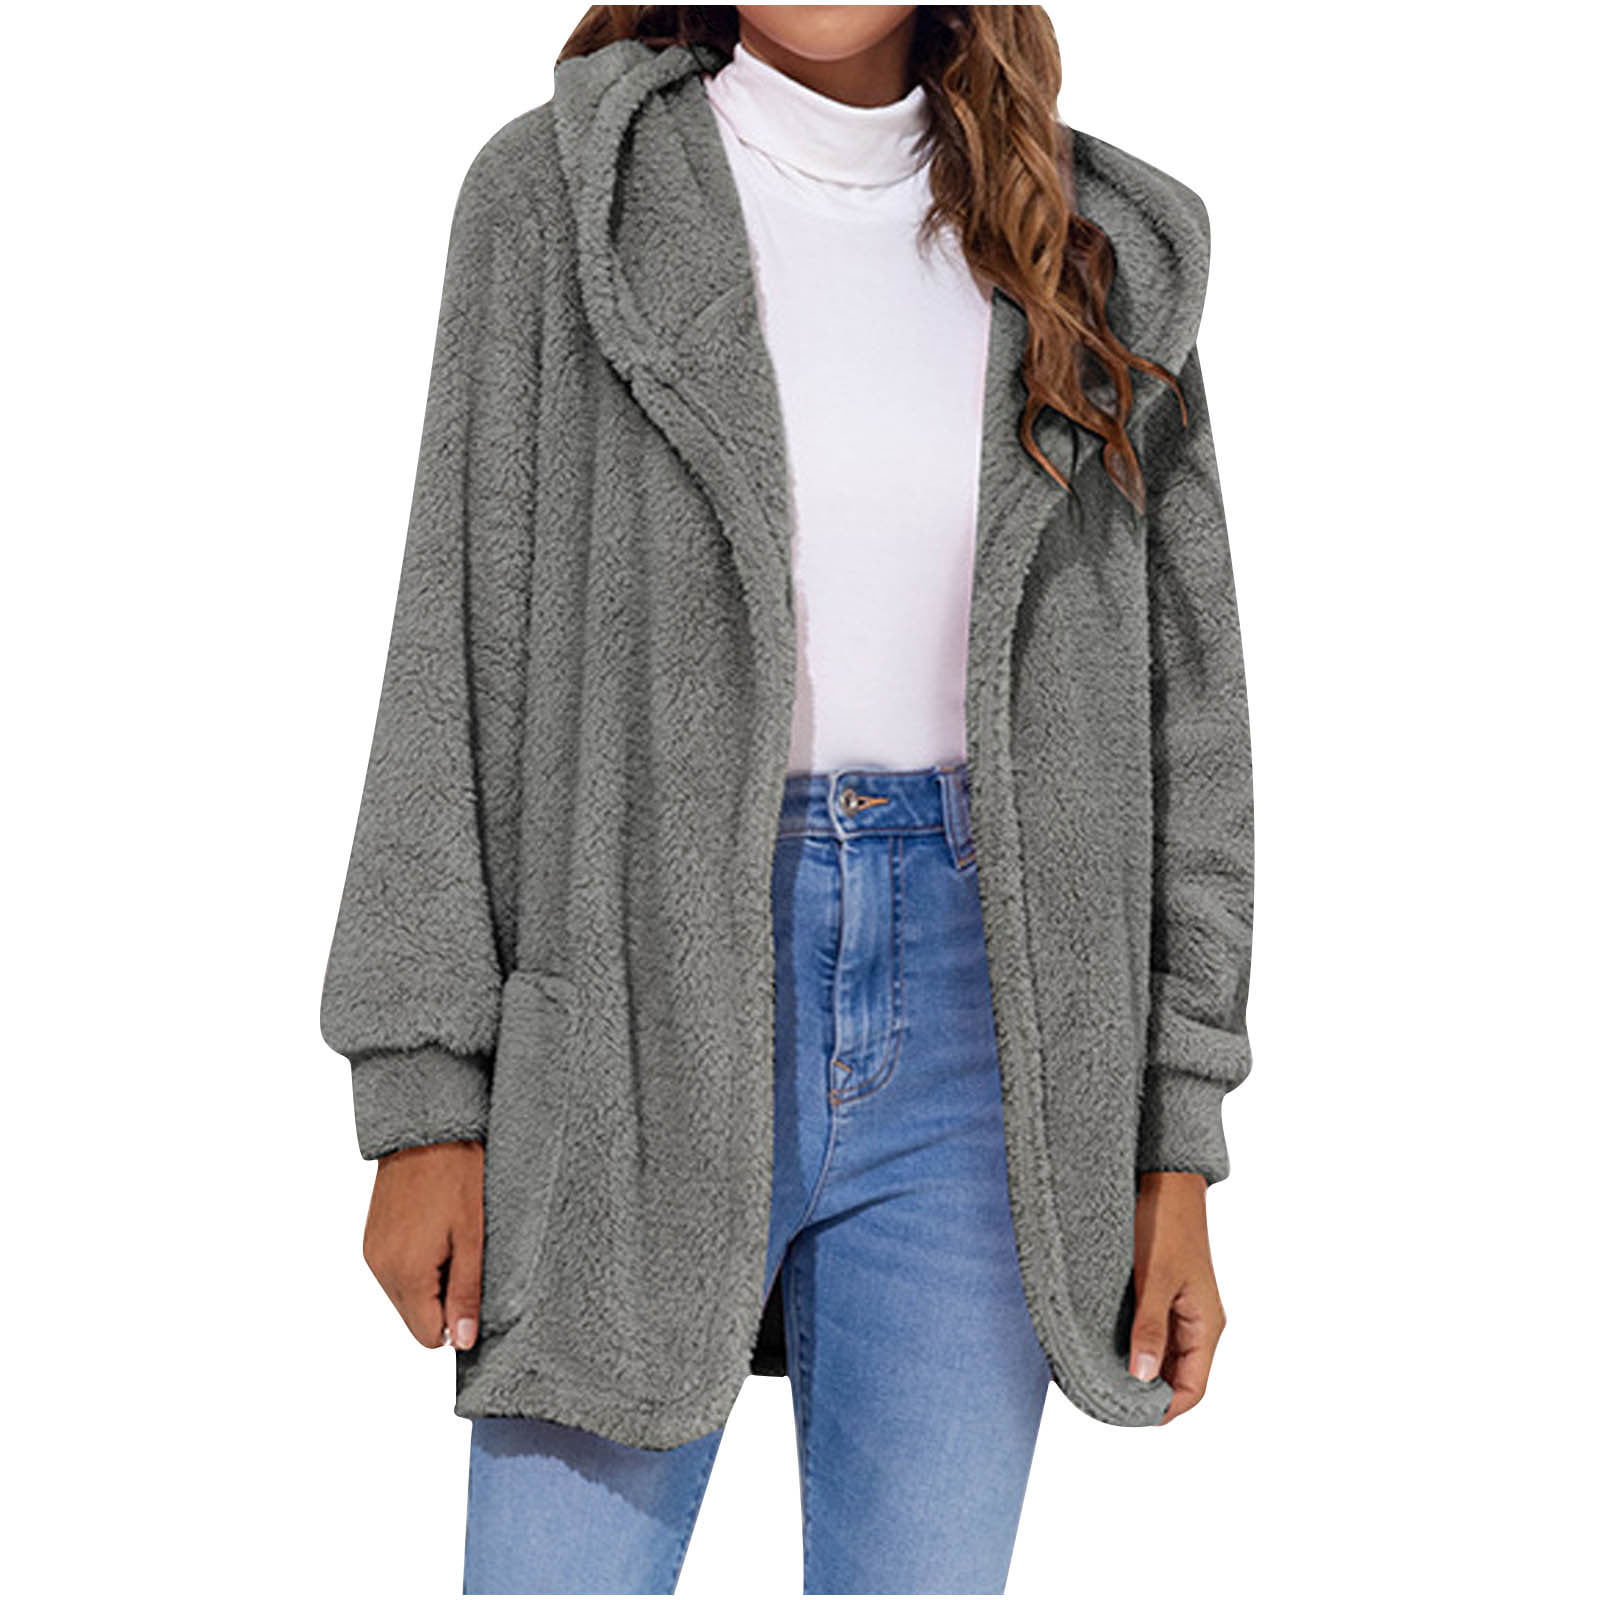 Womens Long Sleeve Irregular Print Casual Cardigan Coat Tops Blouse Jackets 